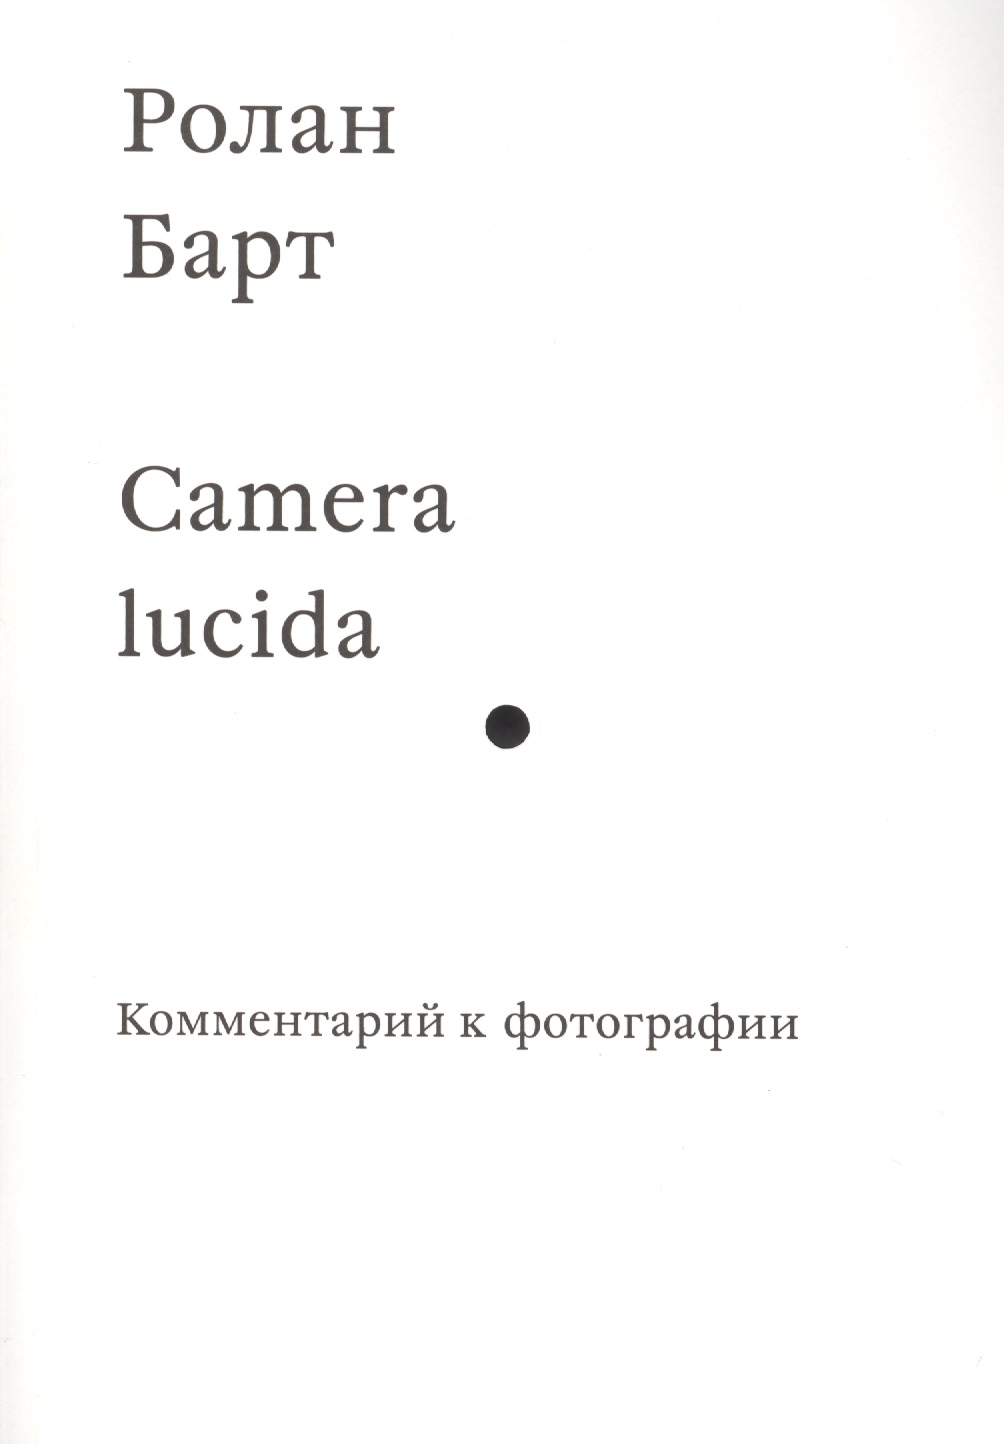 barthes roland camera lucida Барт Ролан Camera lucida. Комментарий к фотографии